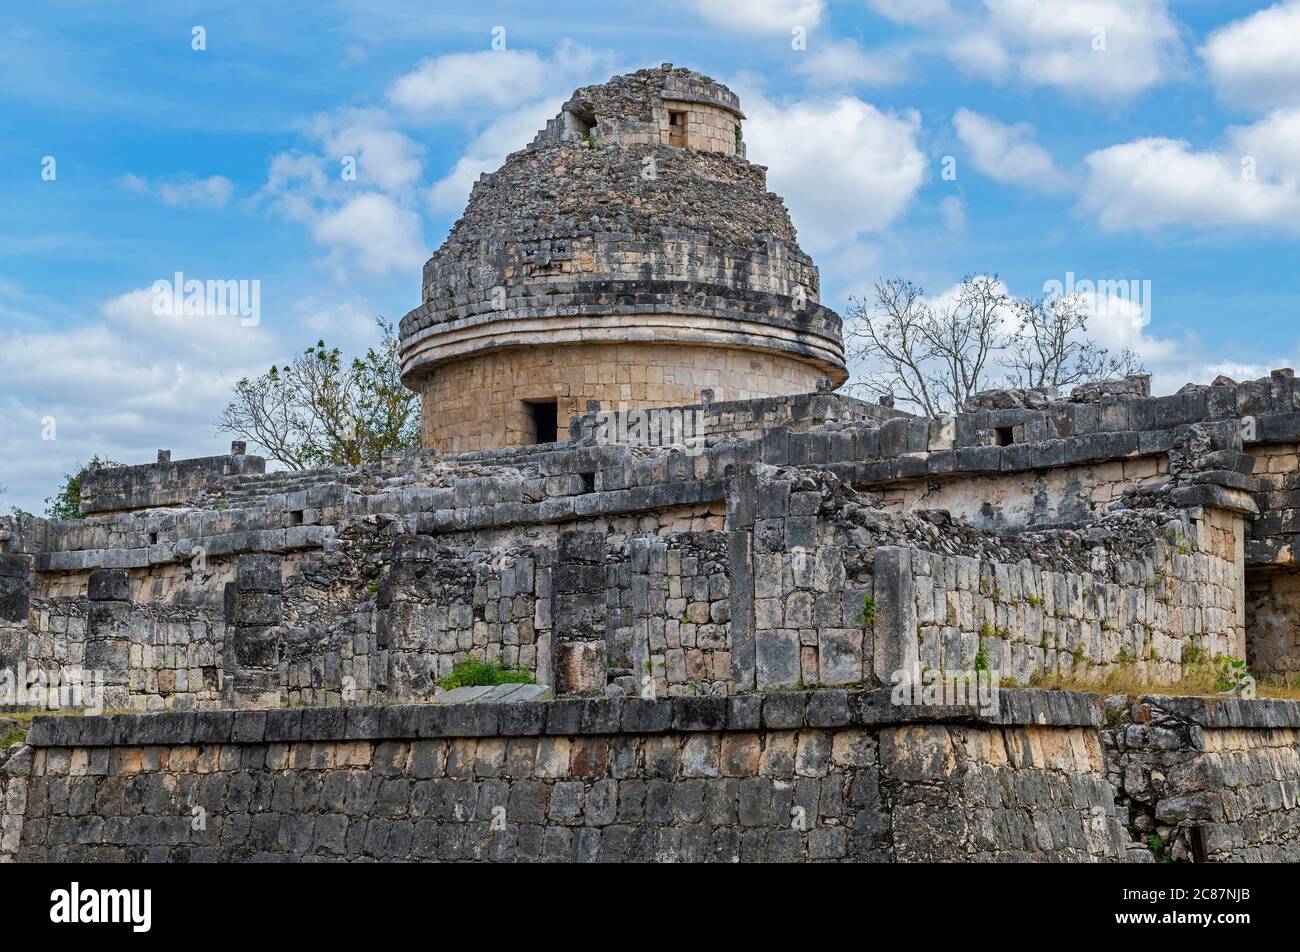 The maya astronomical observatory tower of El Caracol, Chichen Itza, Yucatan Peninsula, Mexico. Stock Photo